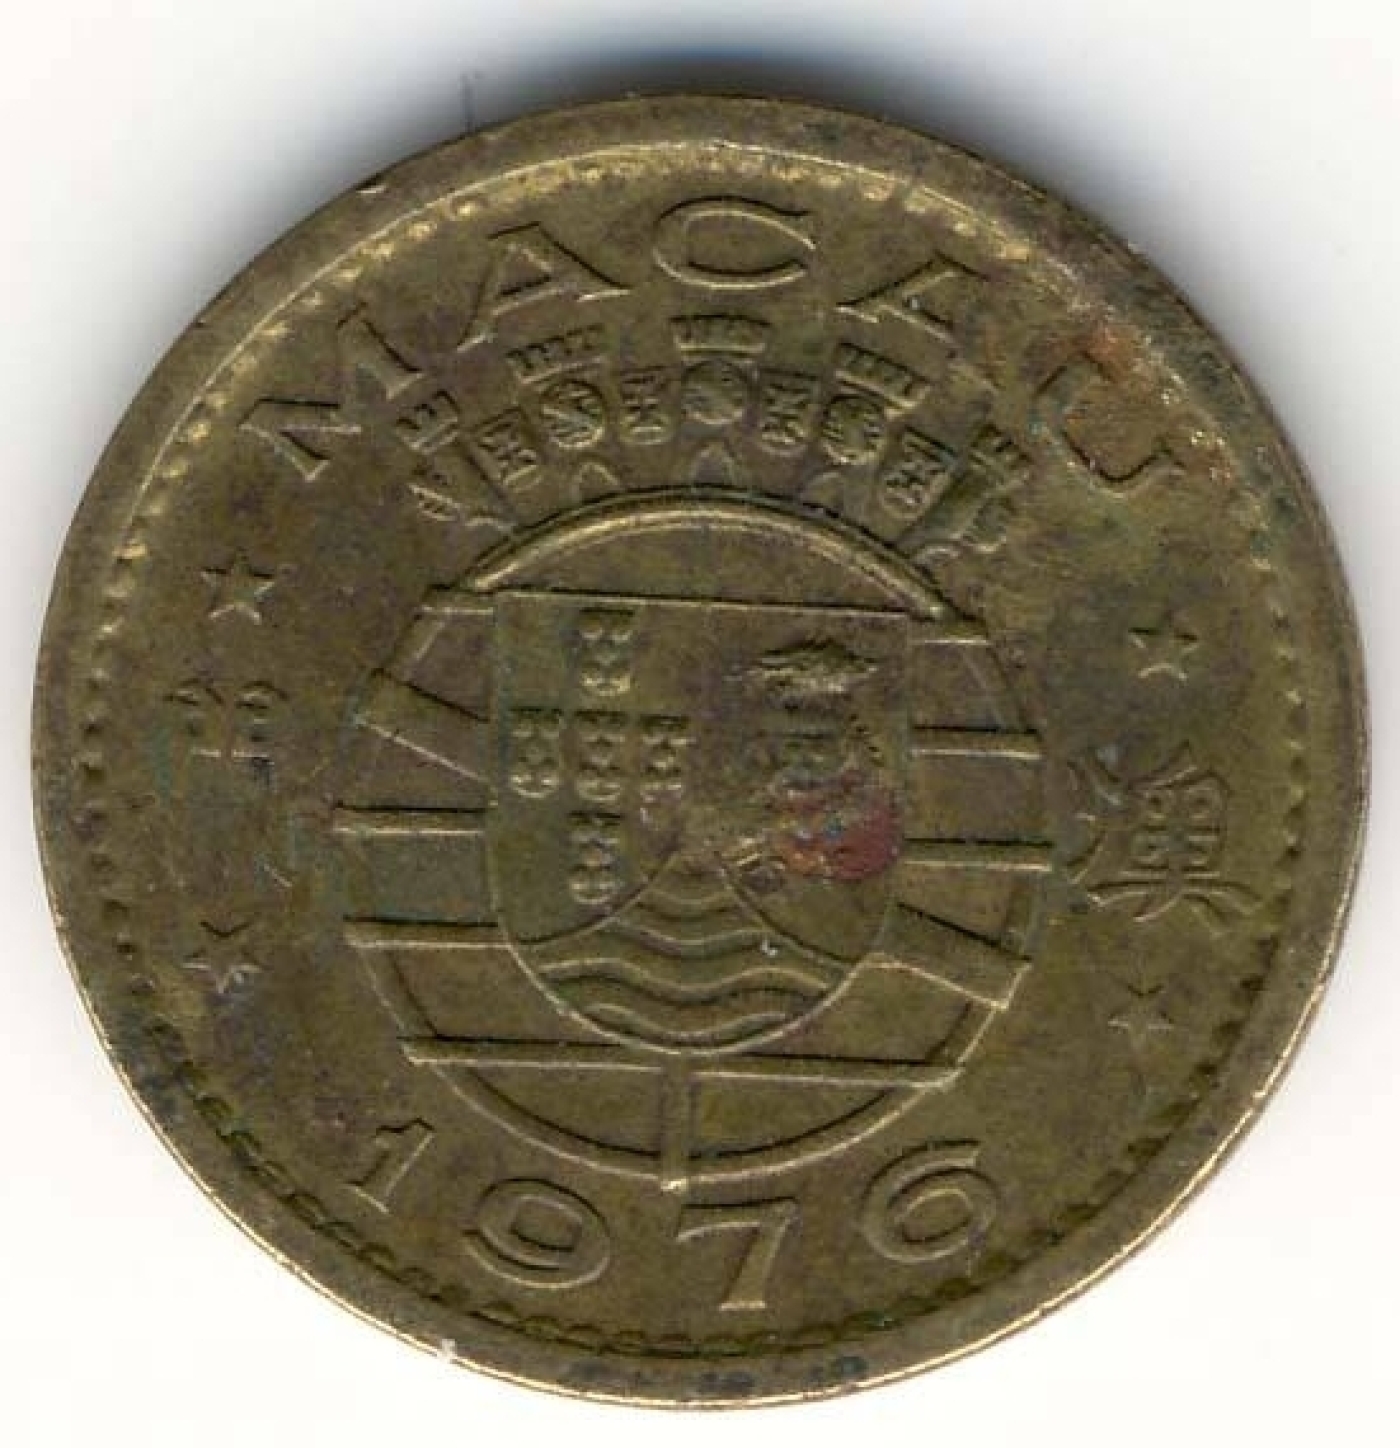 10 Avos 1976, Portuguese colony (1970-1999) - Macao - Coin - 34246